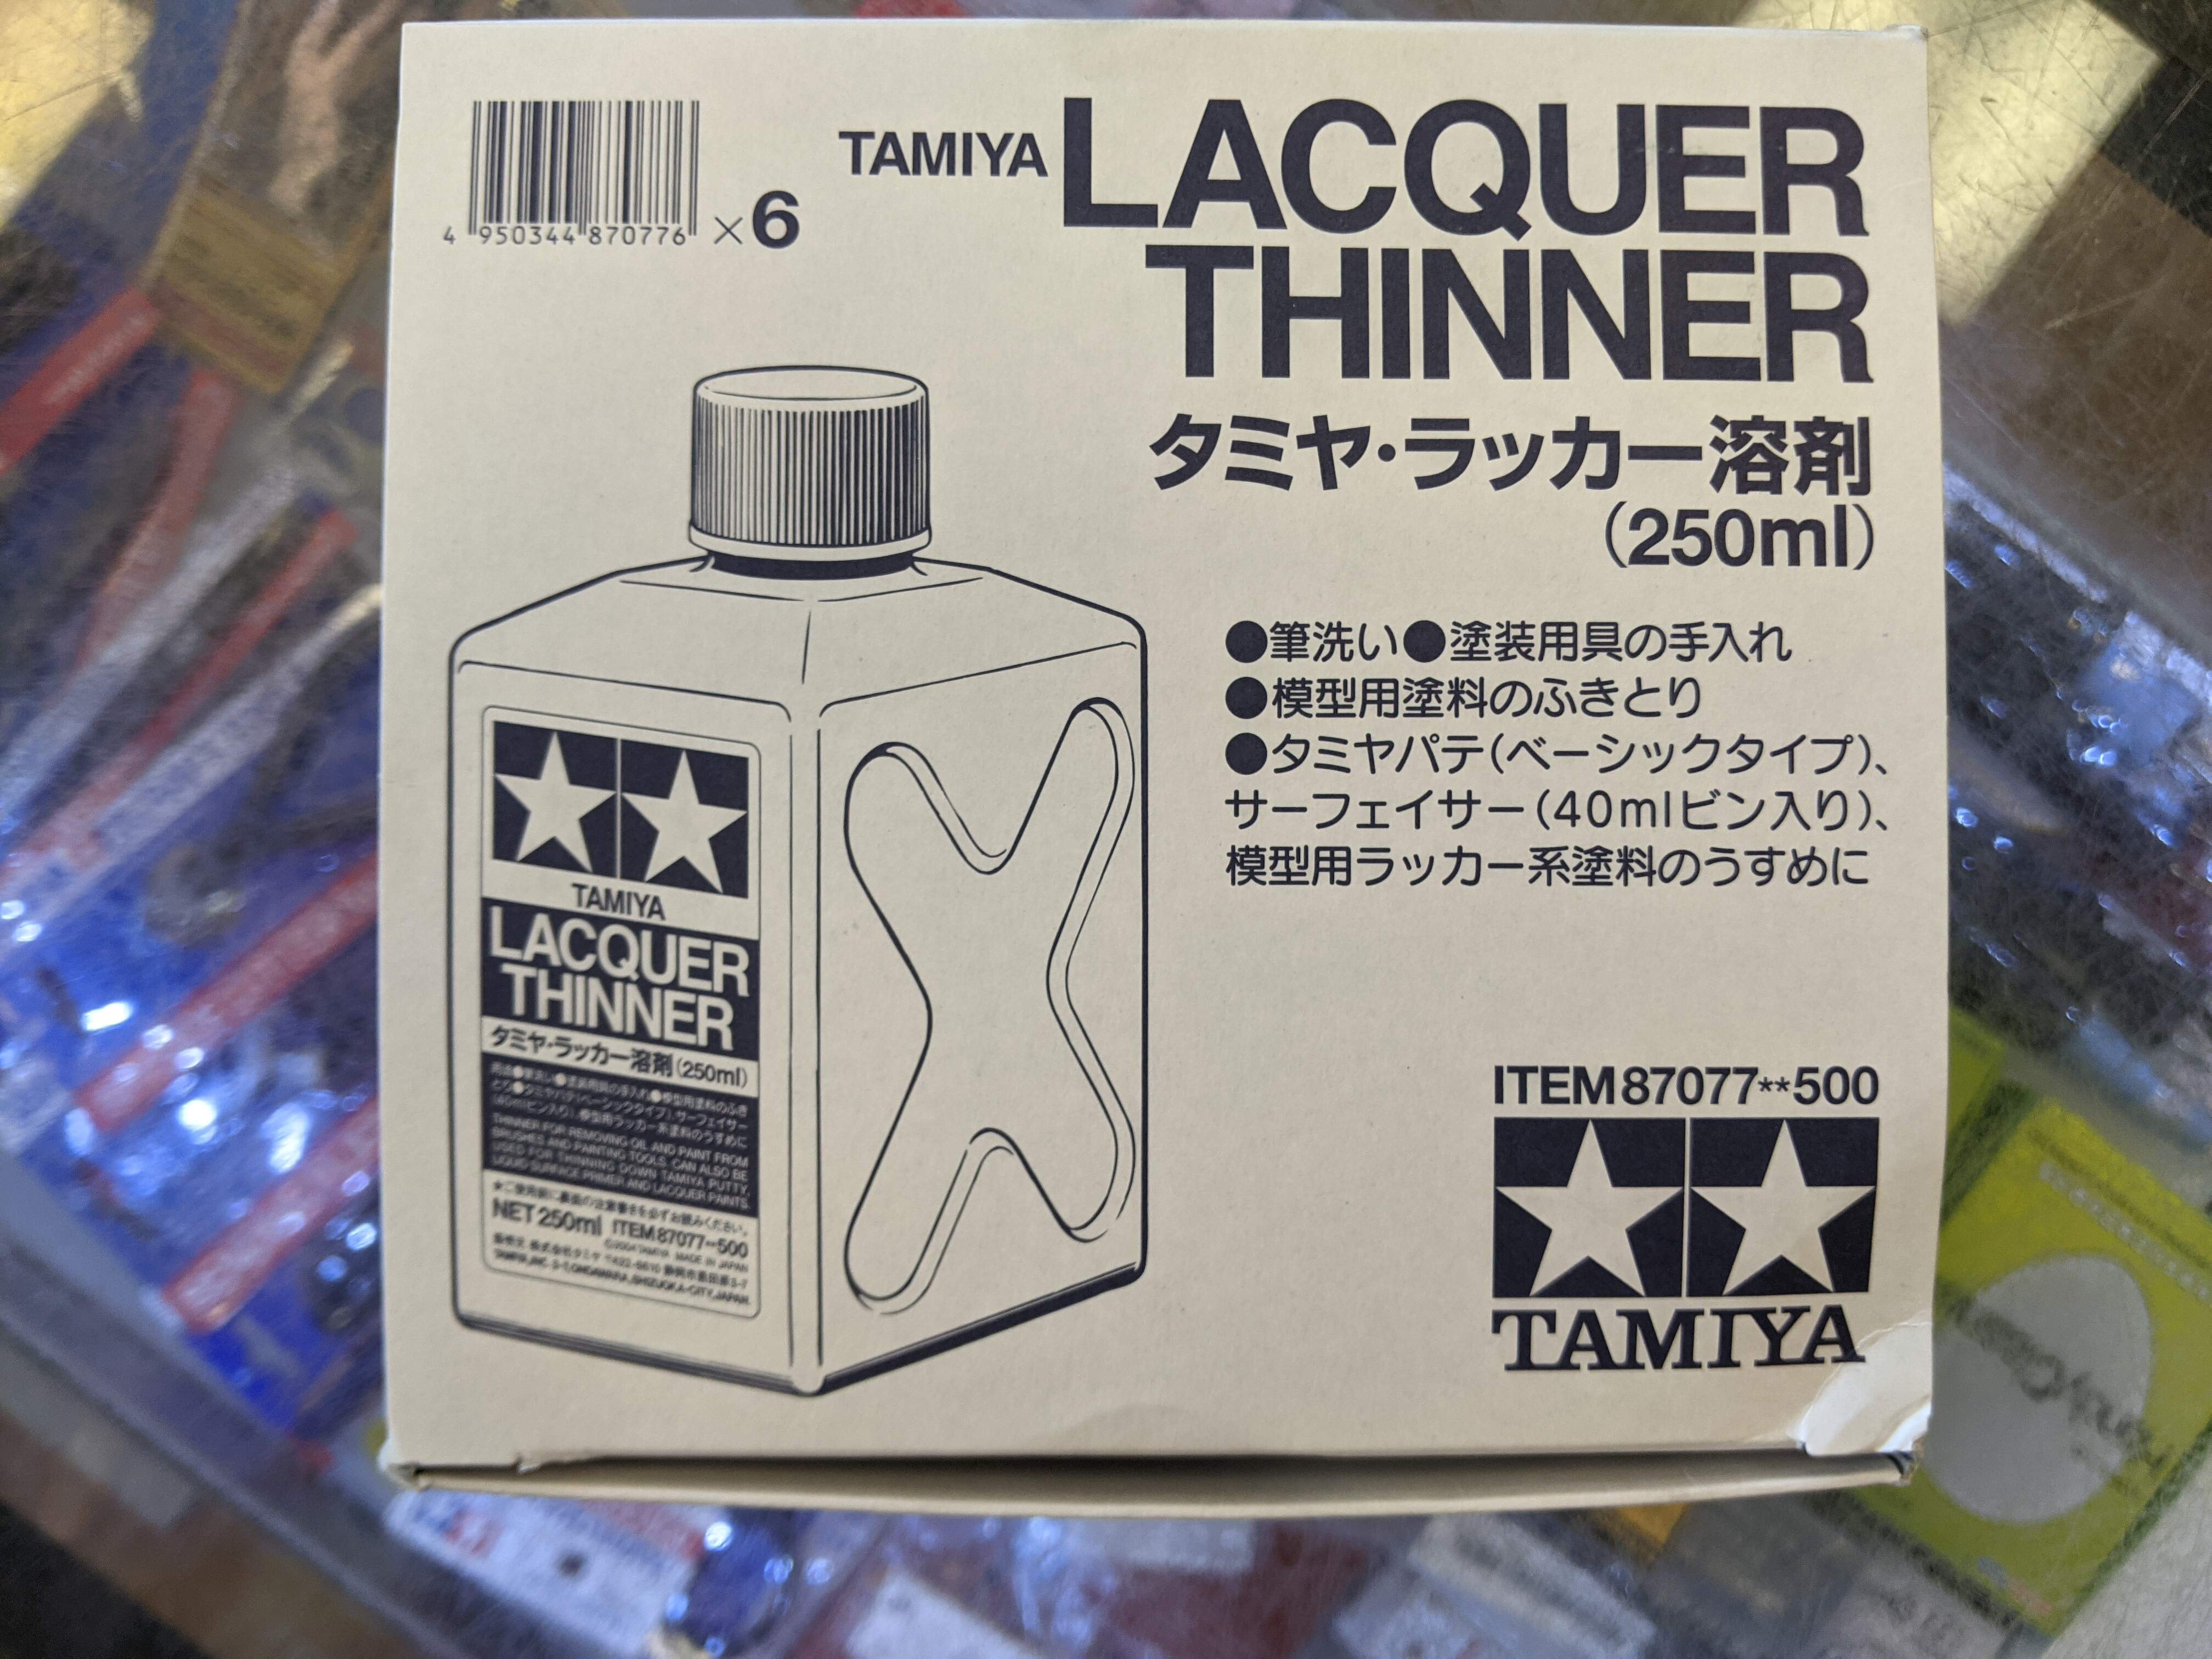 TOP TOOL - TAMIYA LACQUER THINNER